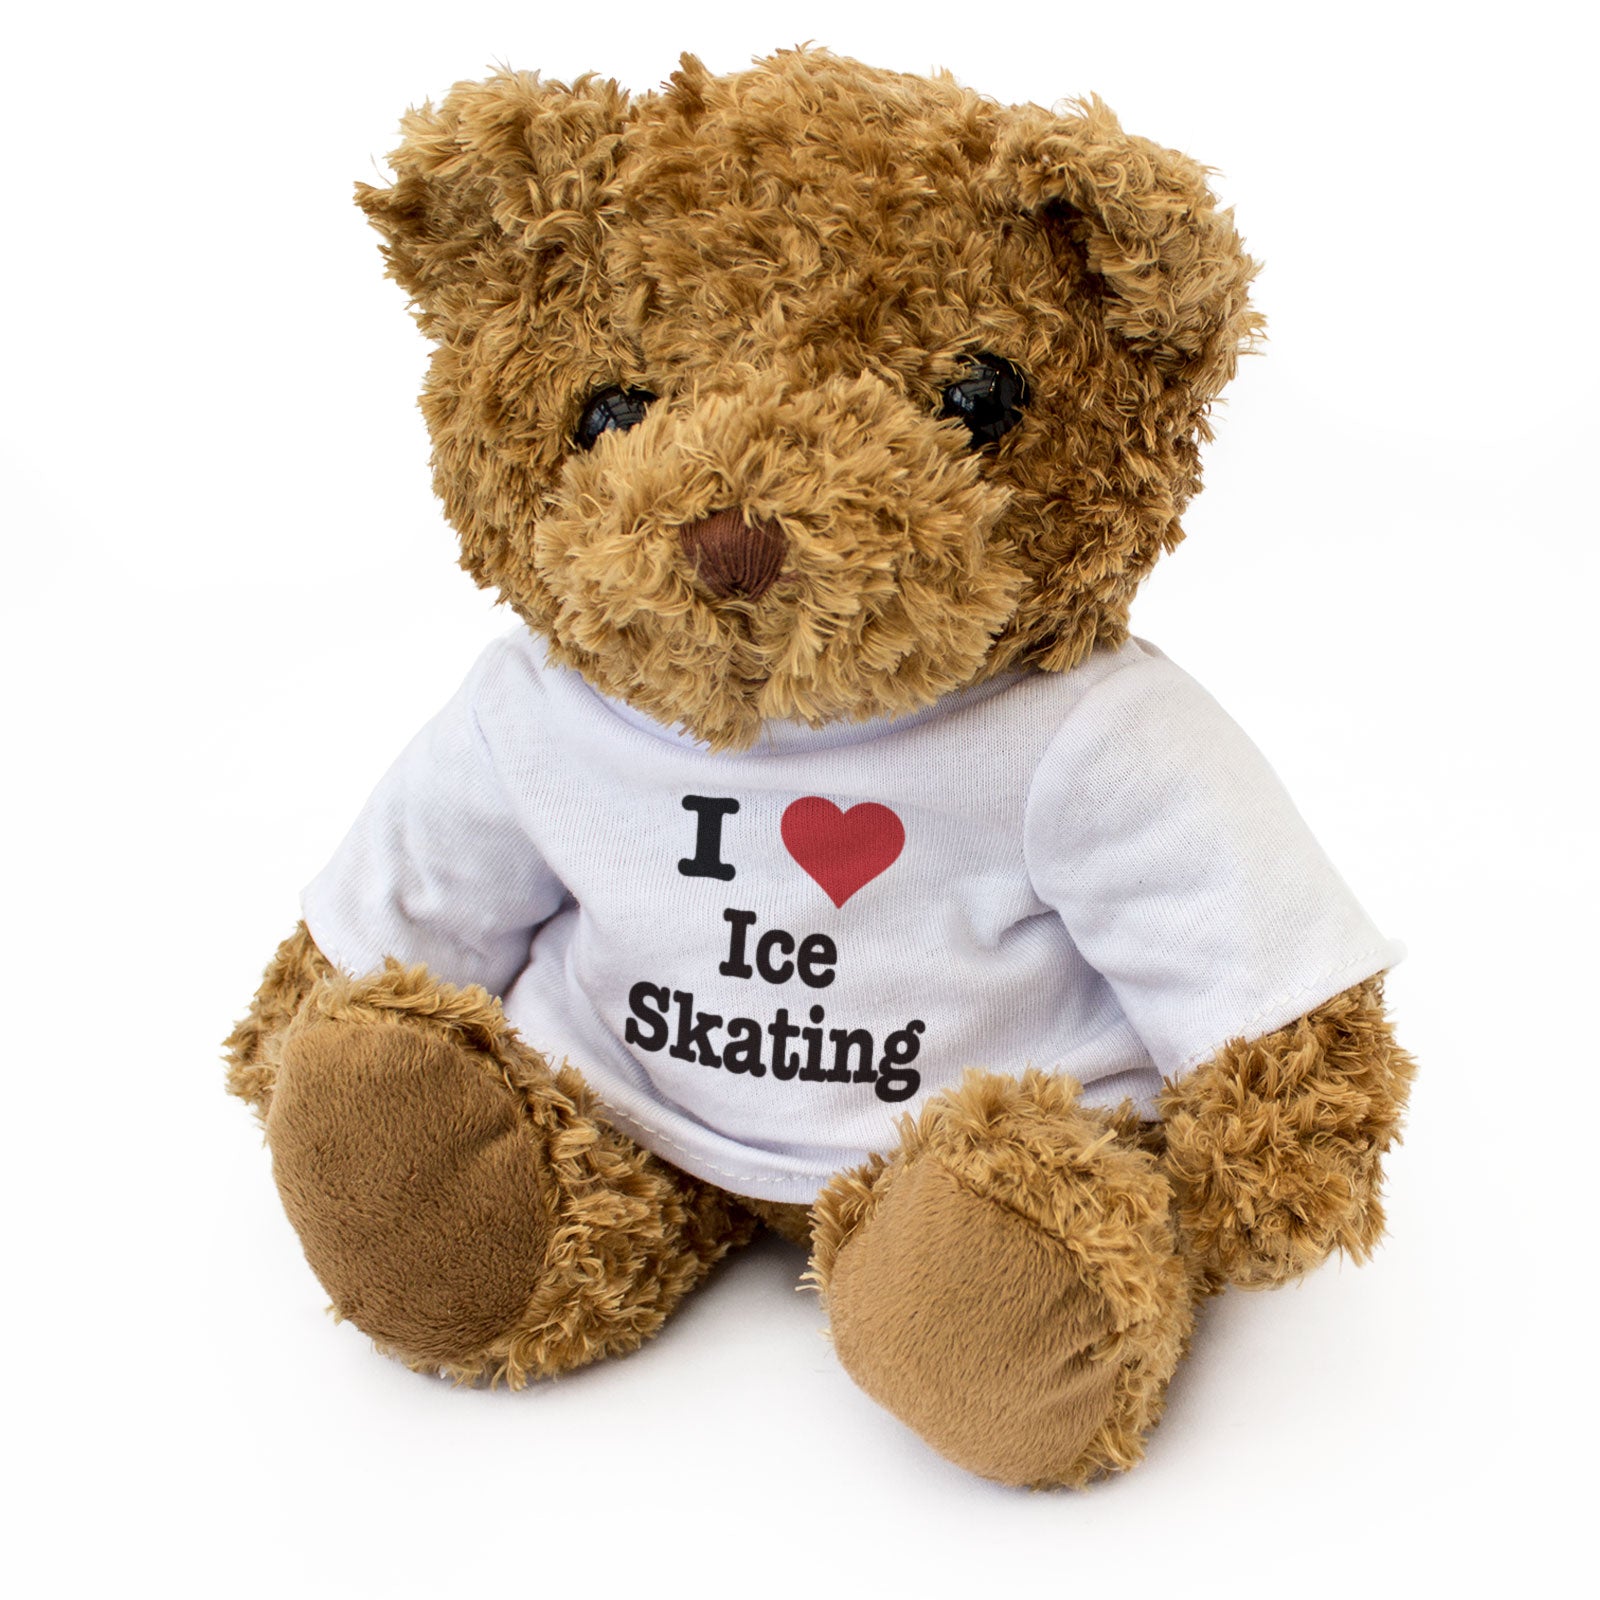 I Love Ice Skating - Teddy Bear